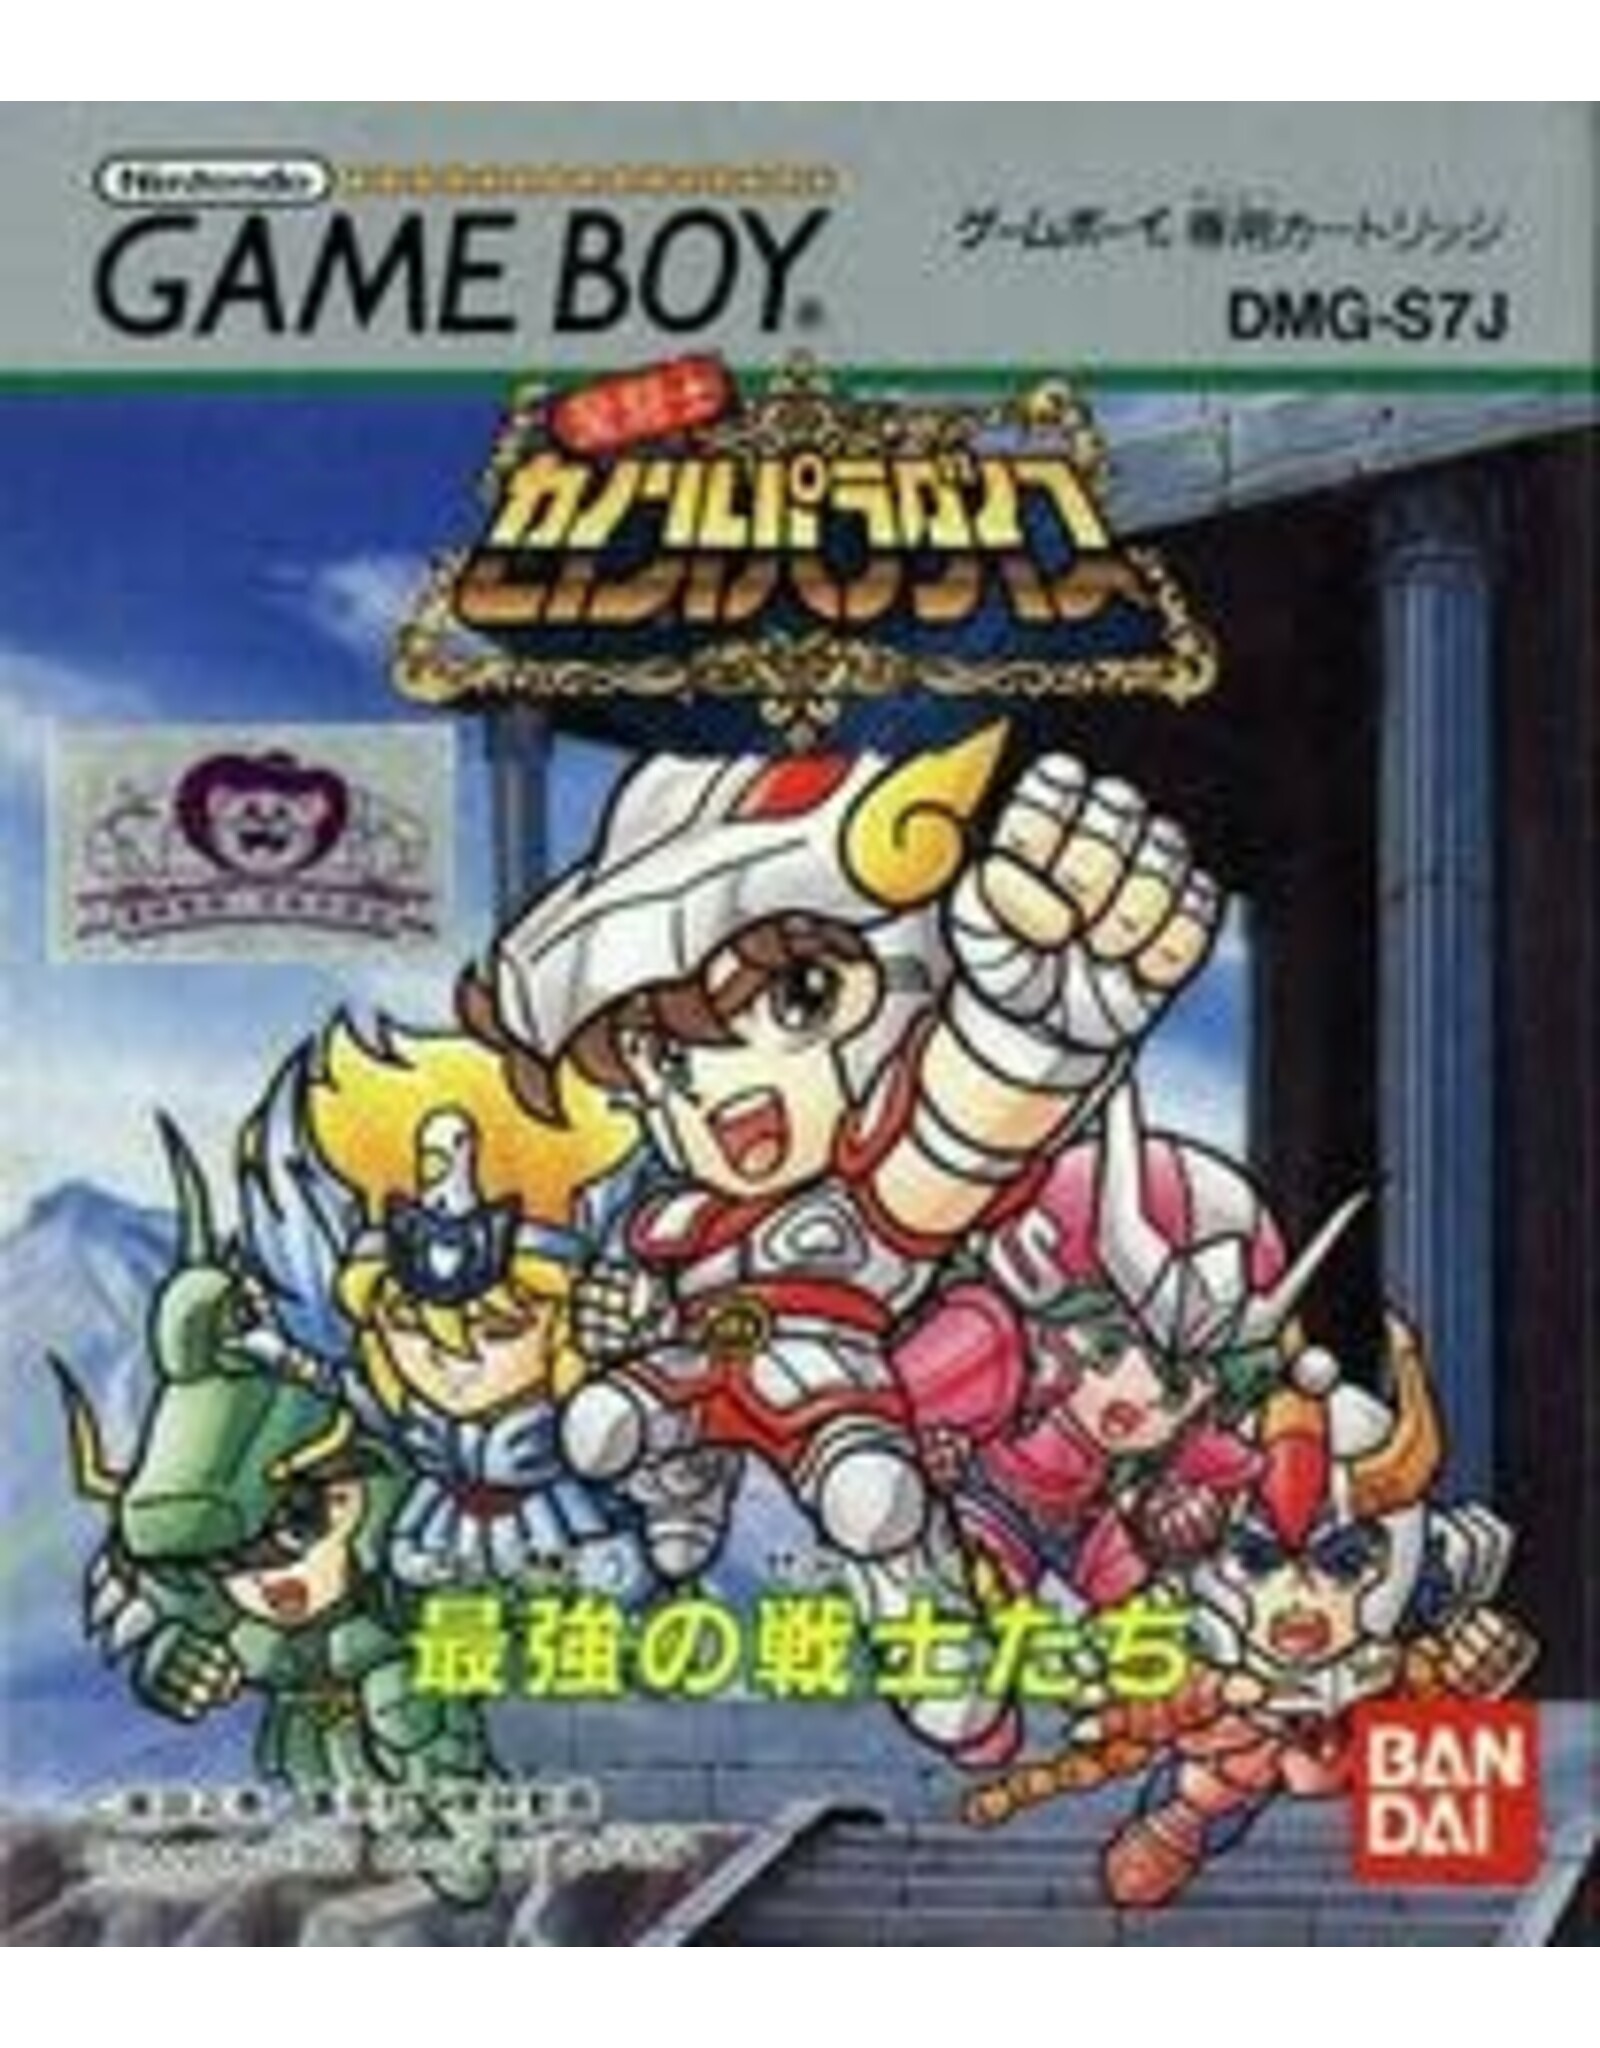 Game Boy Saint Seiya Paradise (Cart Only, Lightly Damaged Cart, JP Import)